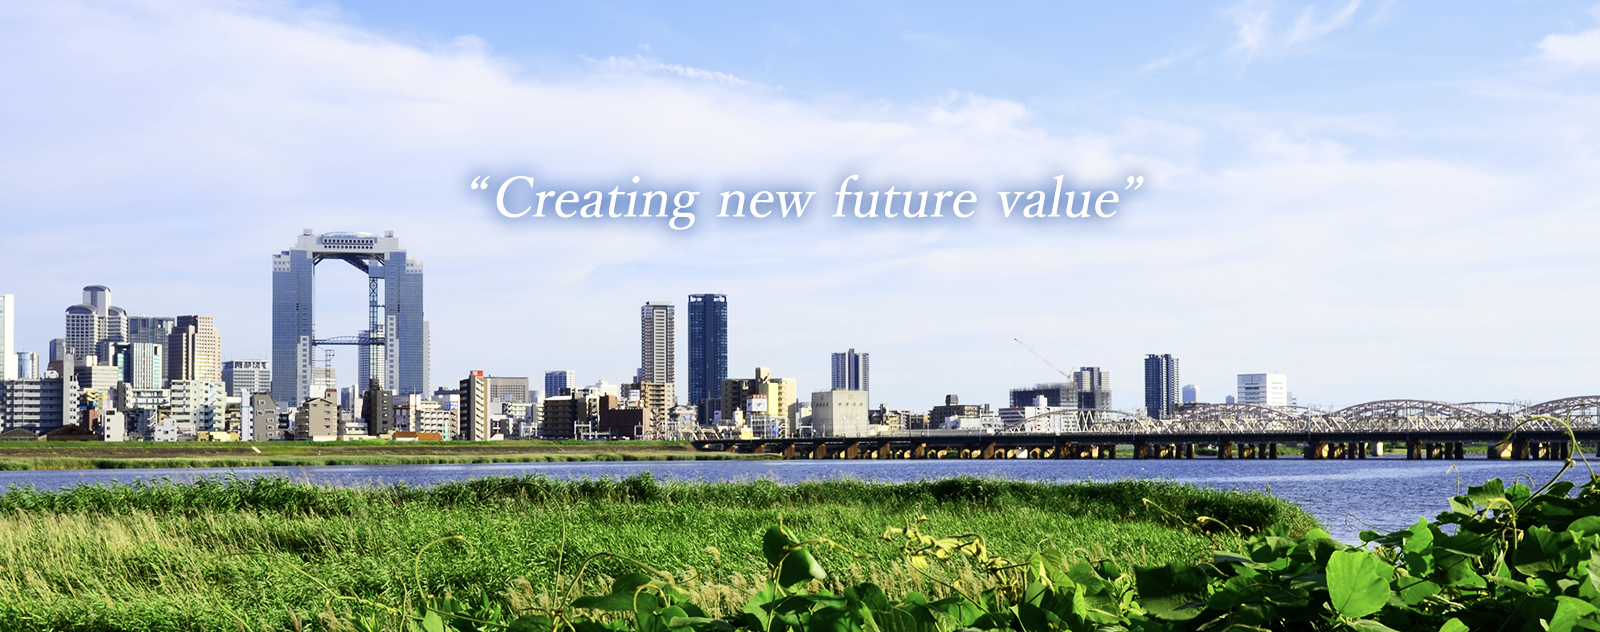 Creating new future value